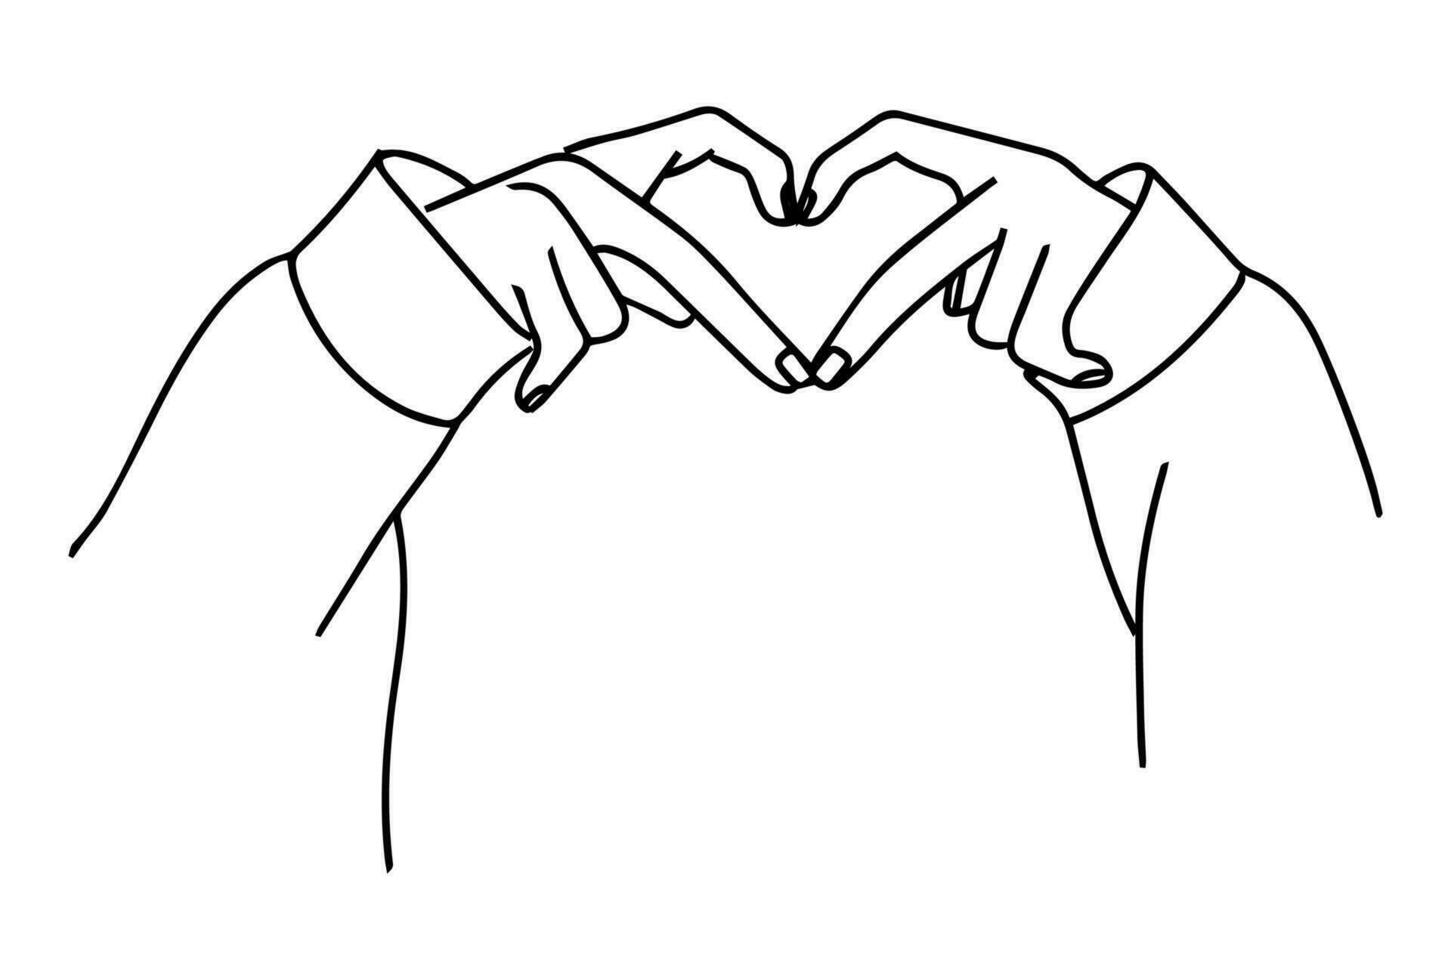 Hands make heart drawn in line art style, declaration of love, Valentine's Day, vector illustration.